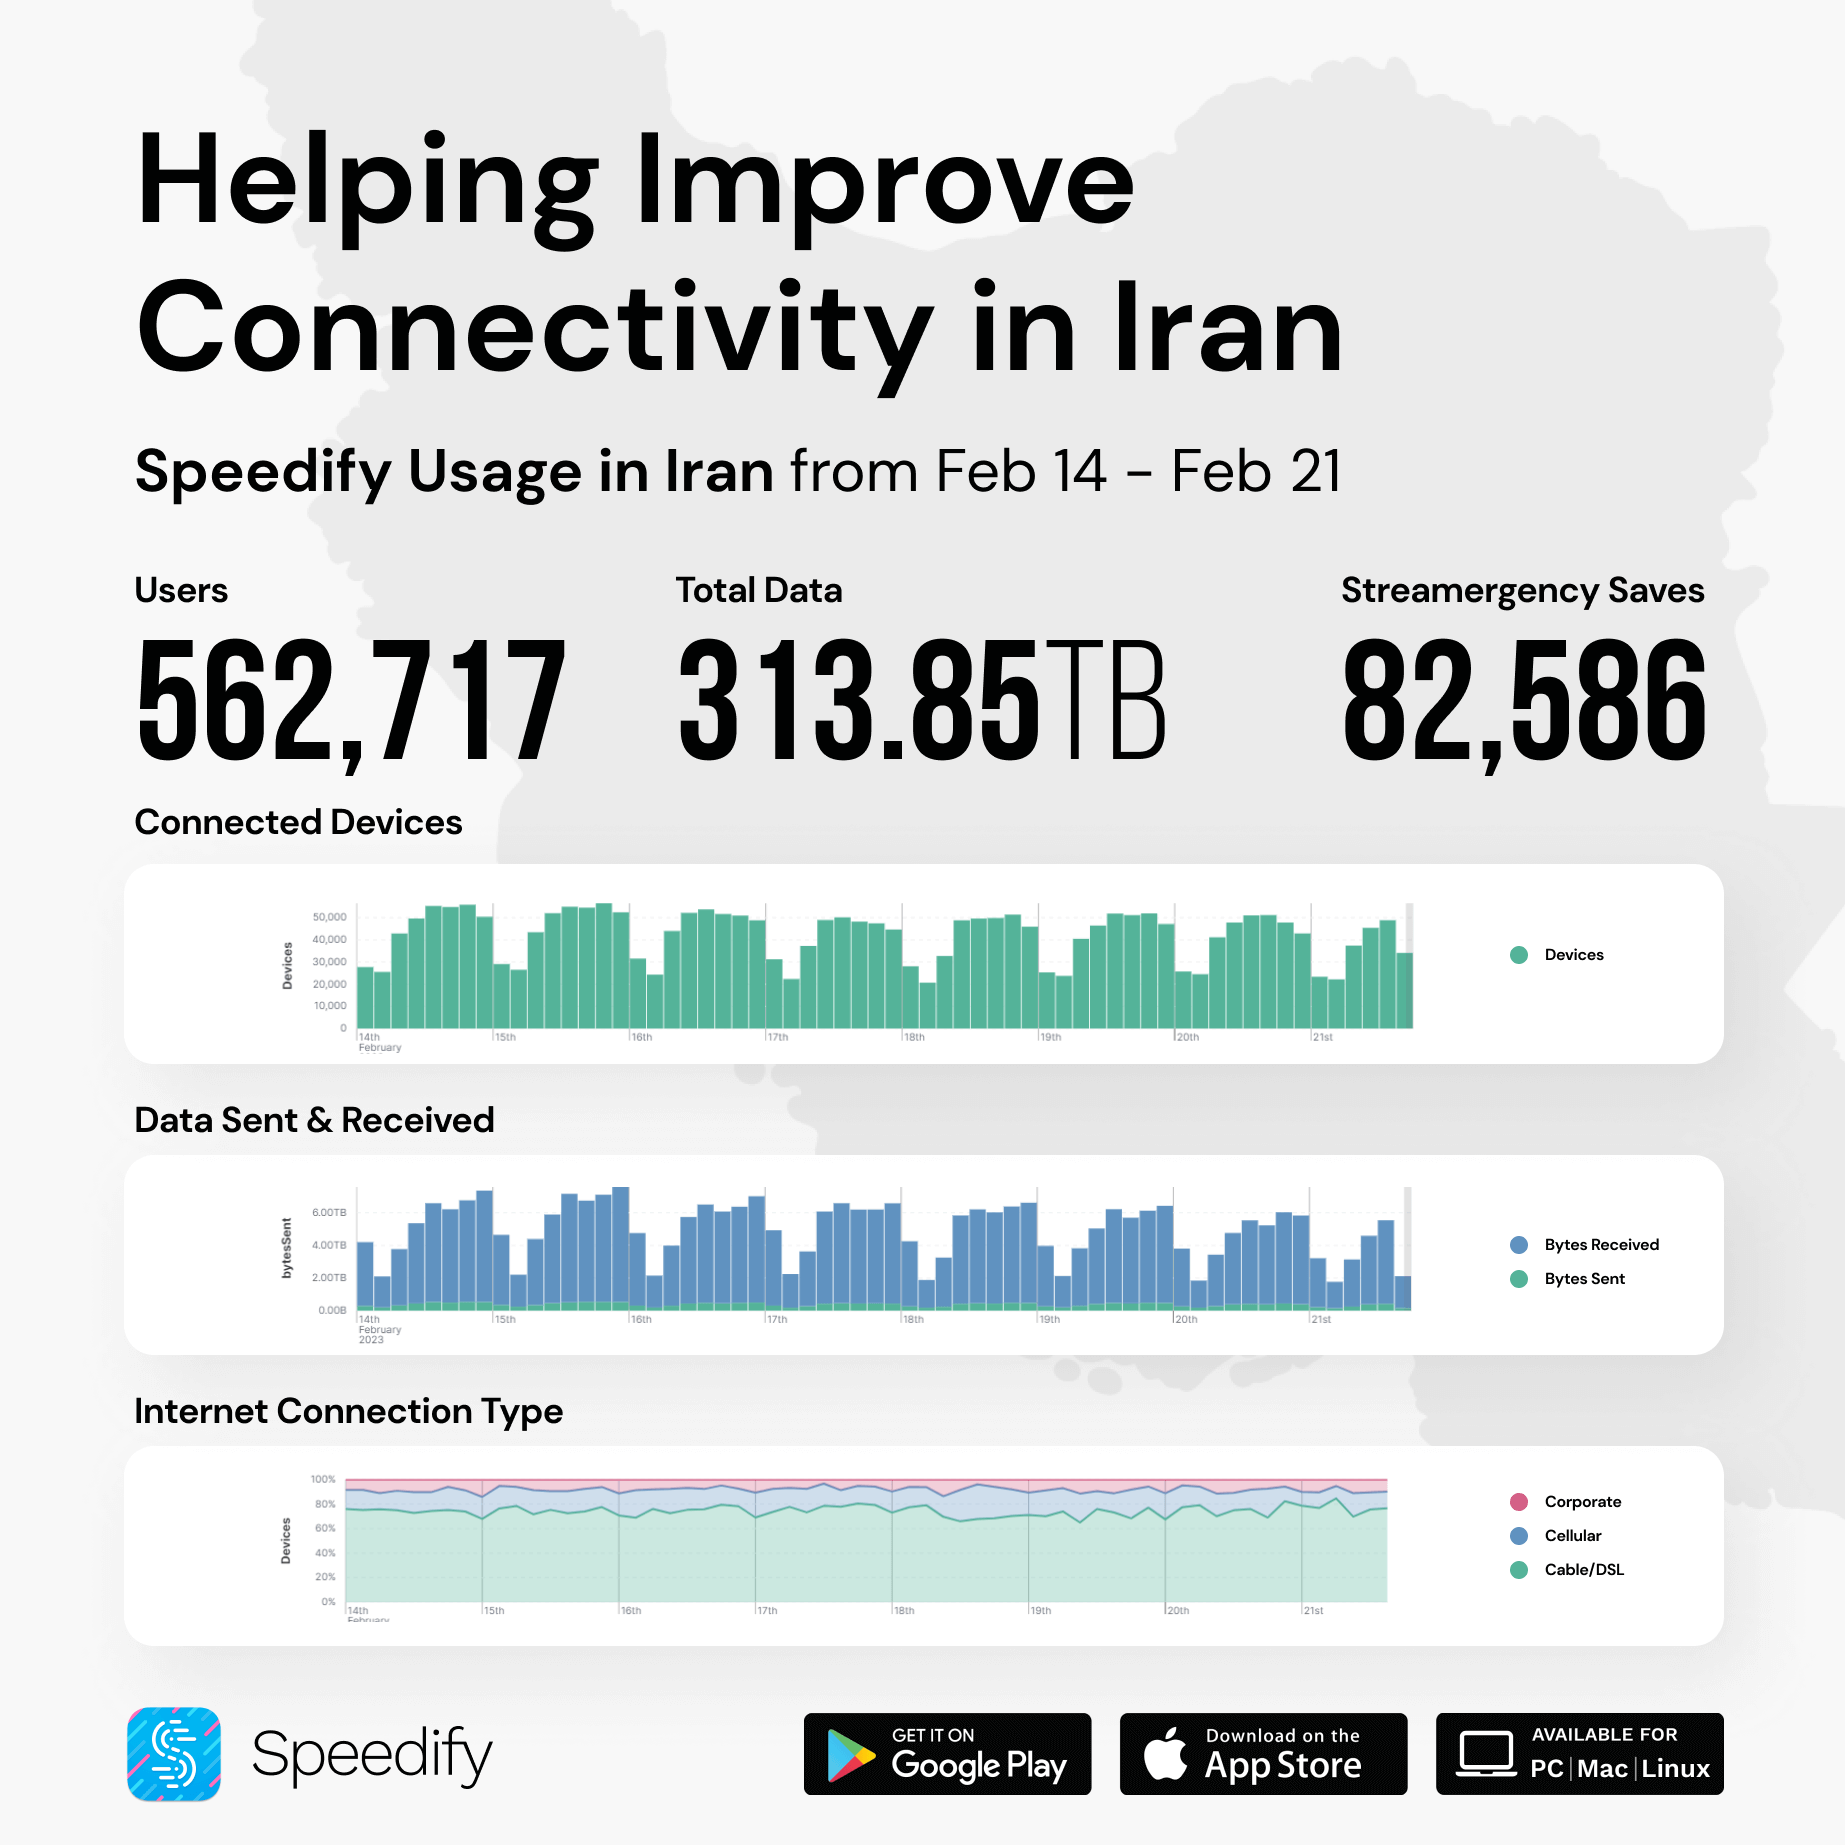 Feb 21 - Iran Internet usage for Speedify users